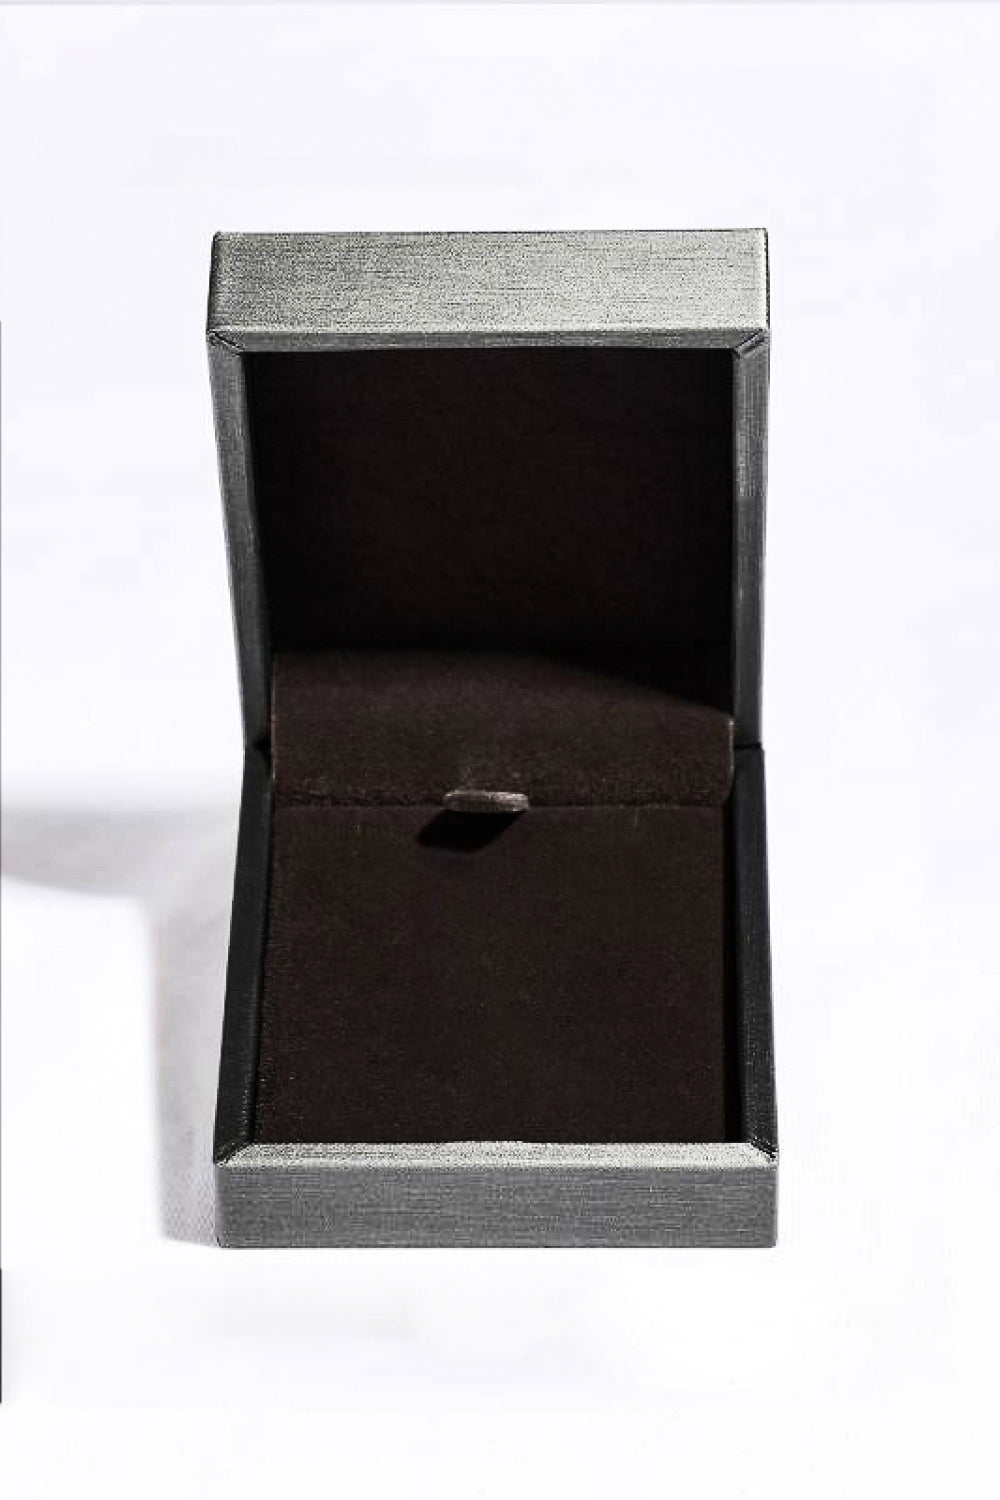 Zircon Cross Pendant 925 Sterling Silver Necklace